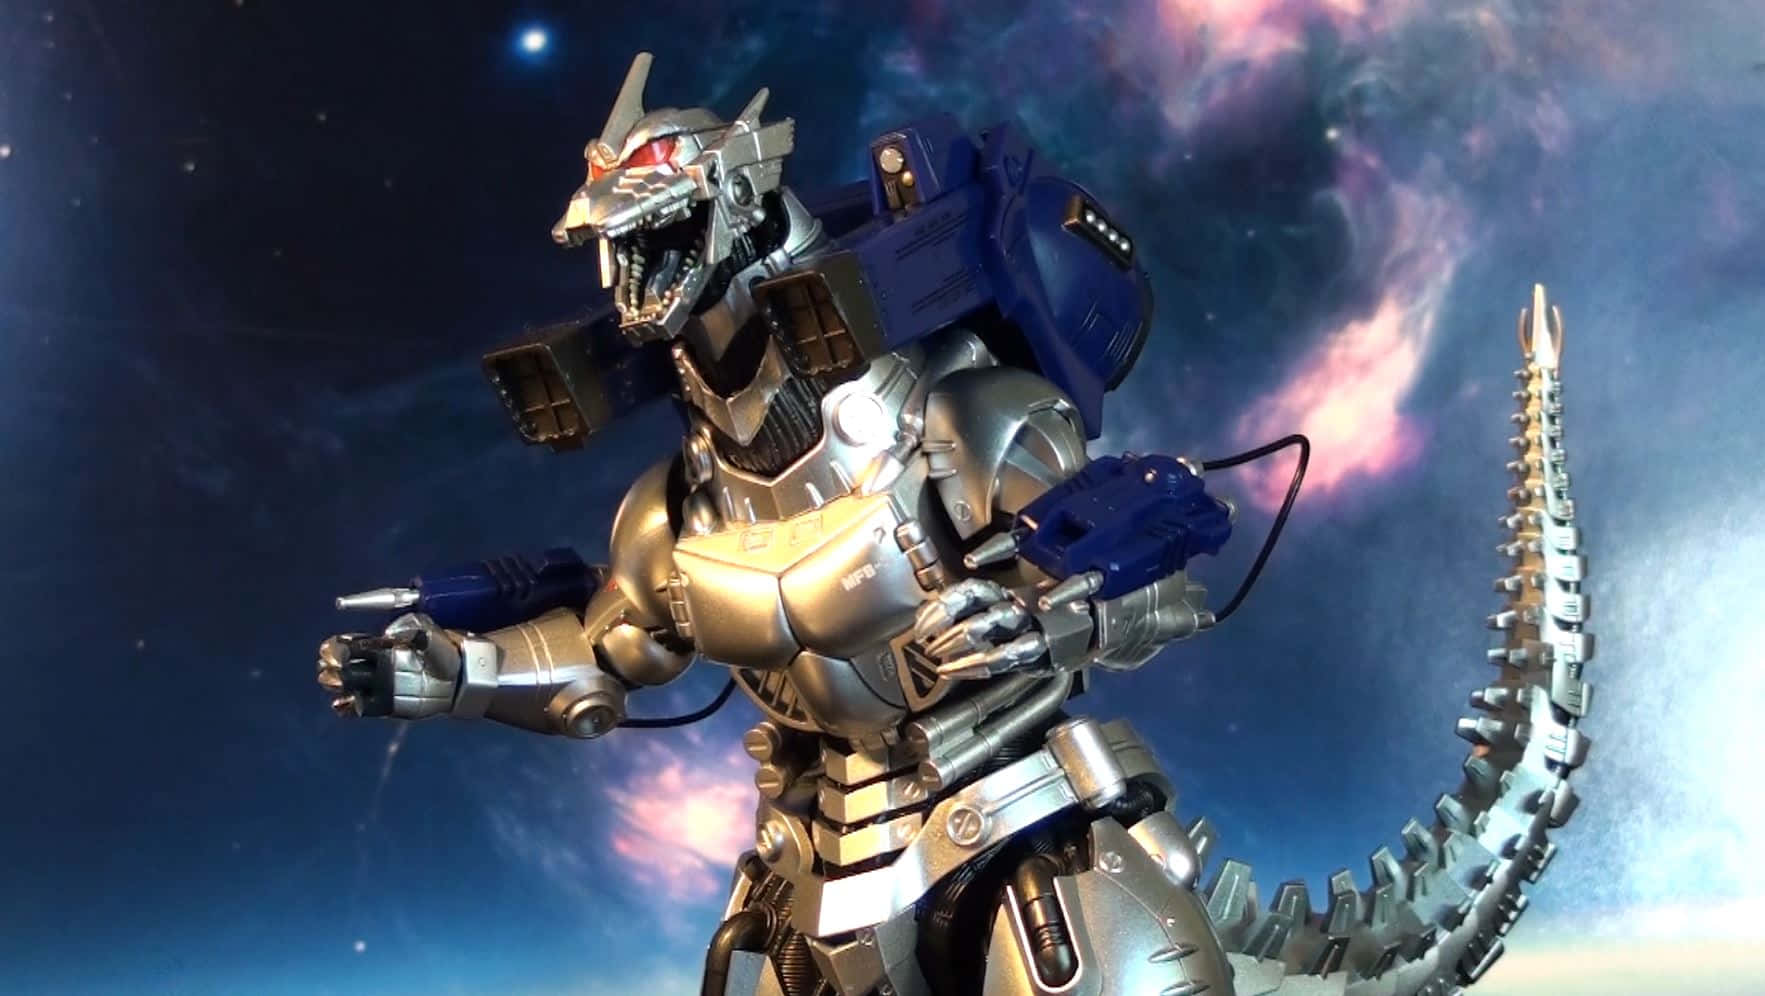 Mechagodzilla, The Powerful Robotic Kaiju In Action Background